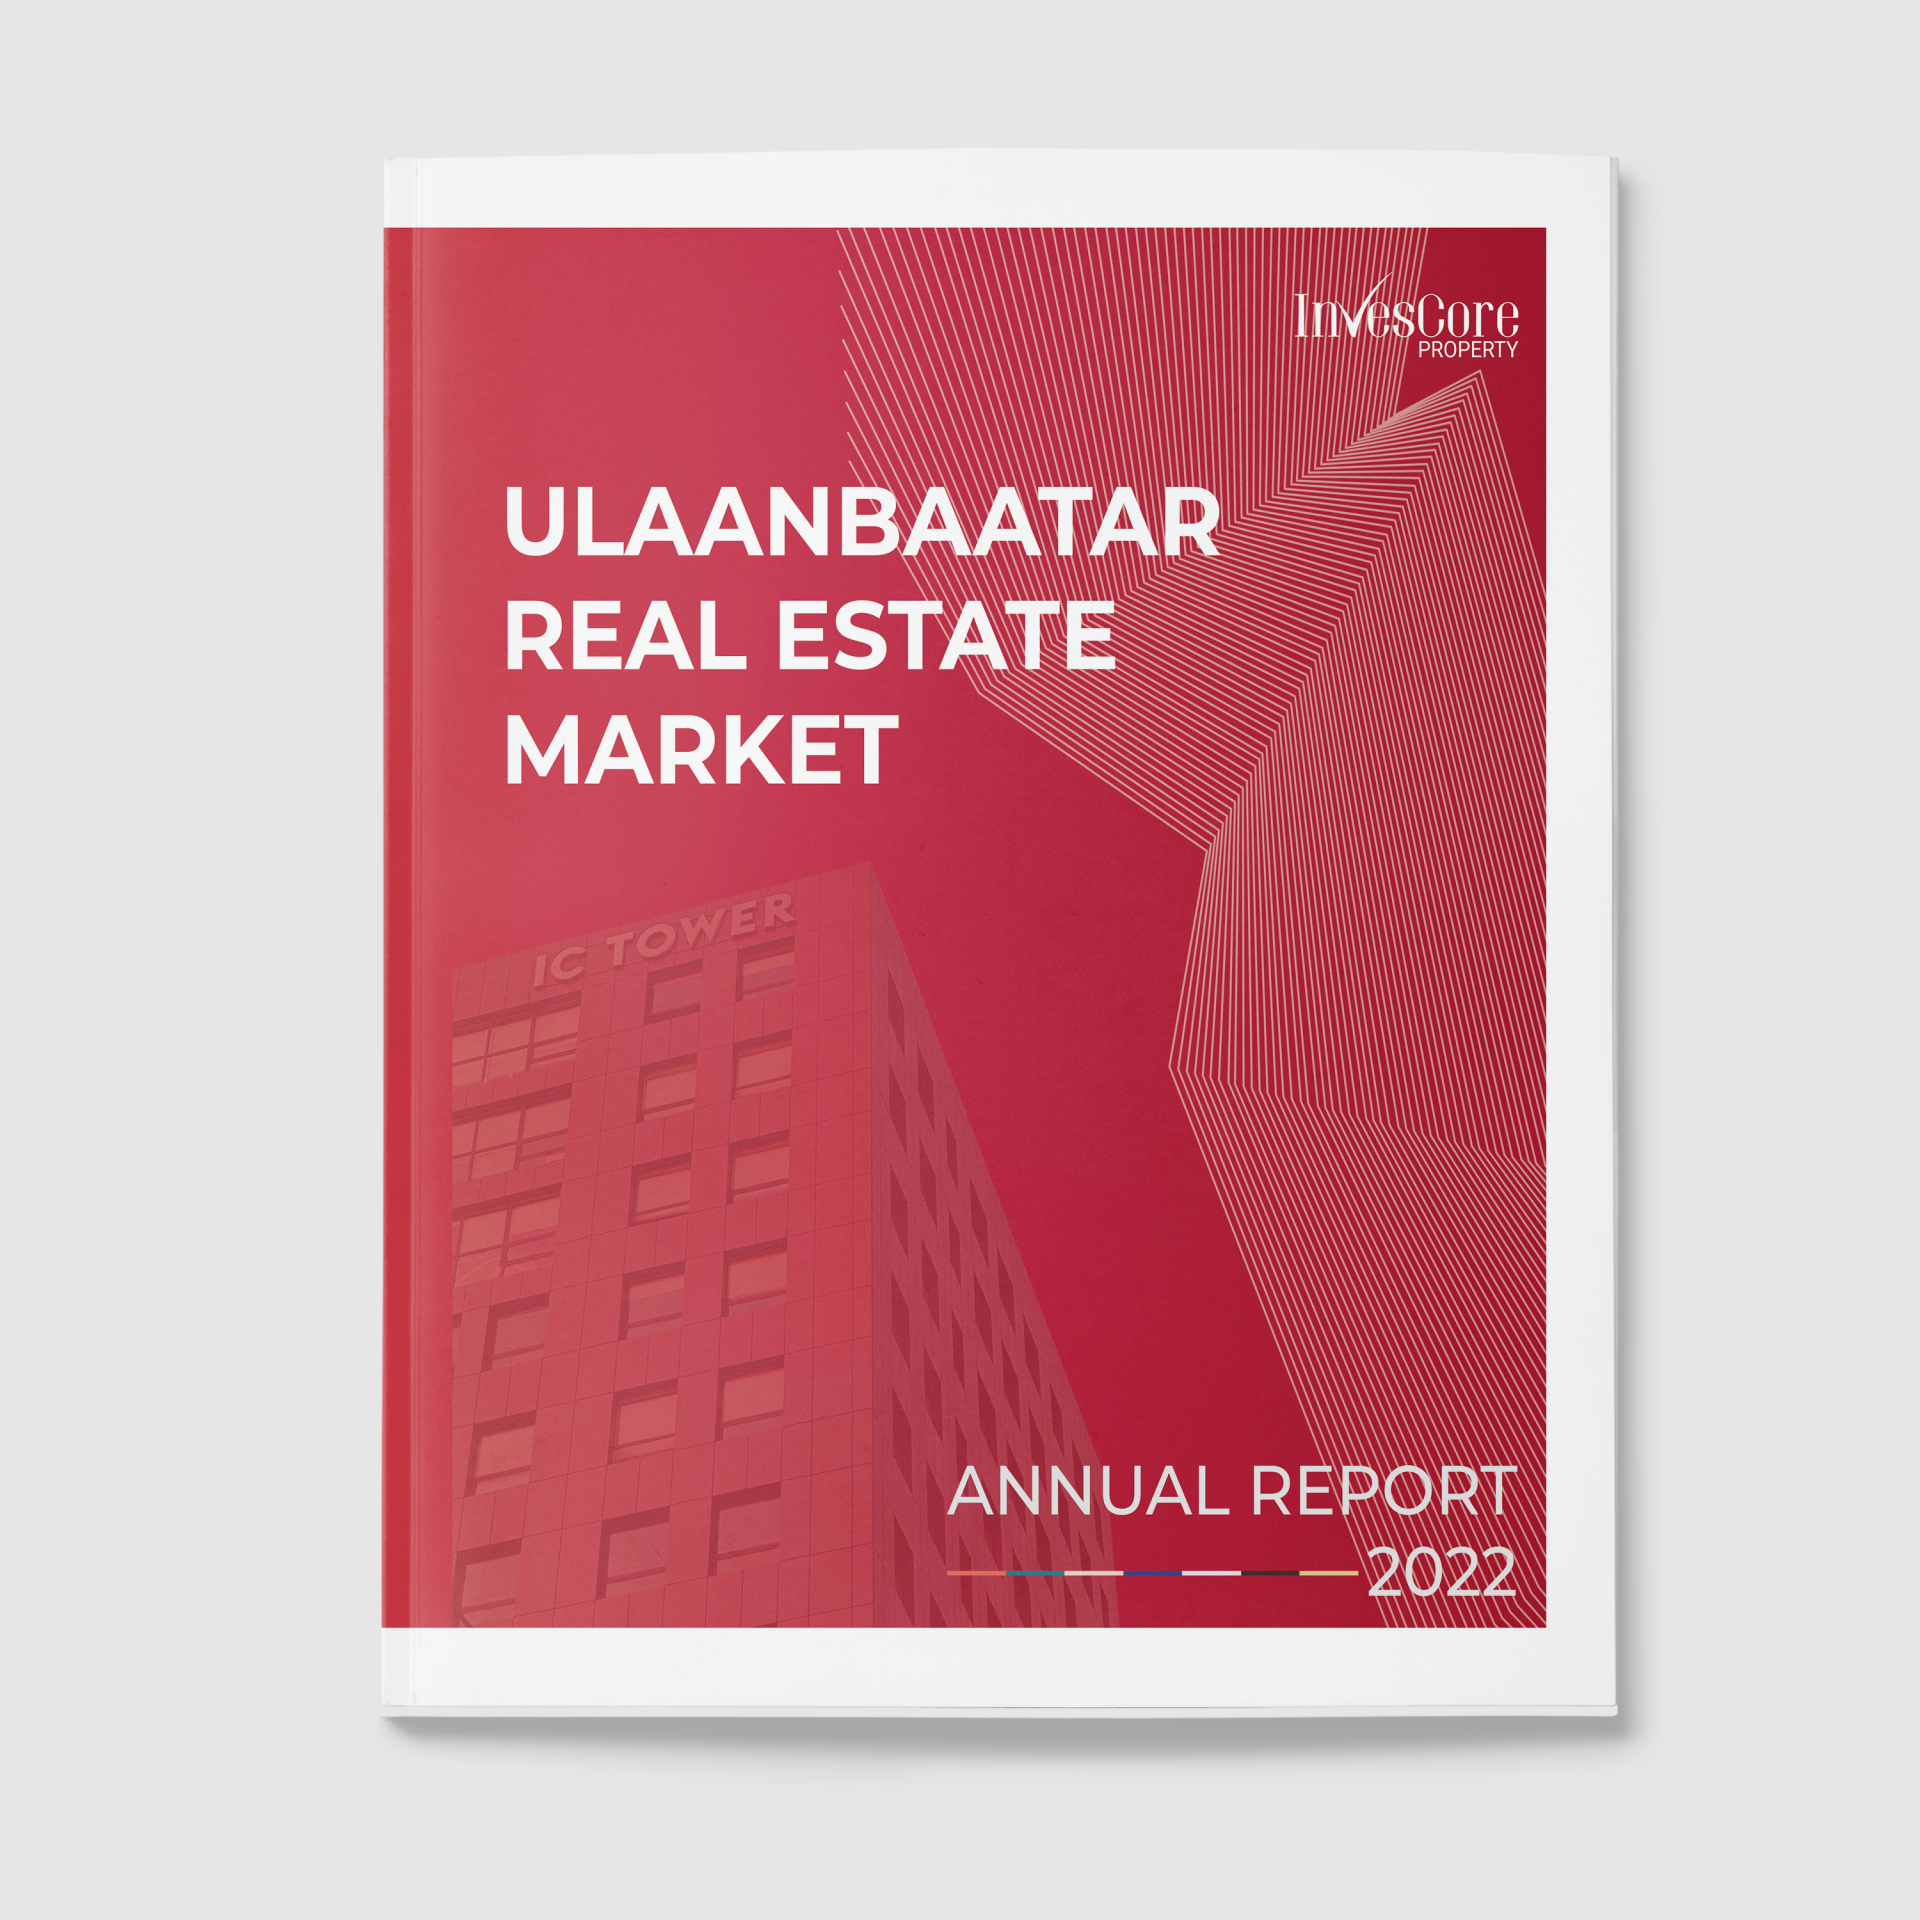 Ulaanbaatar real estate market Annual report 2022